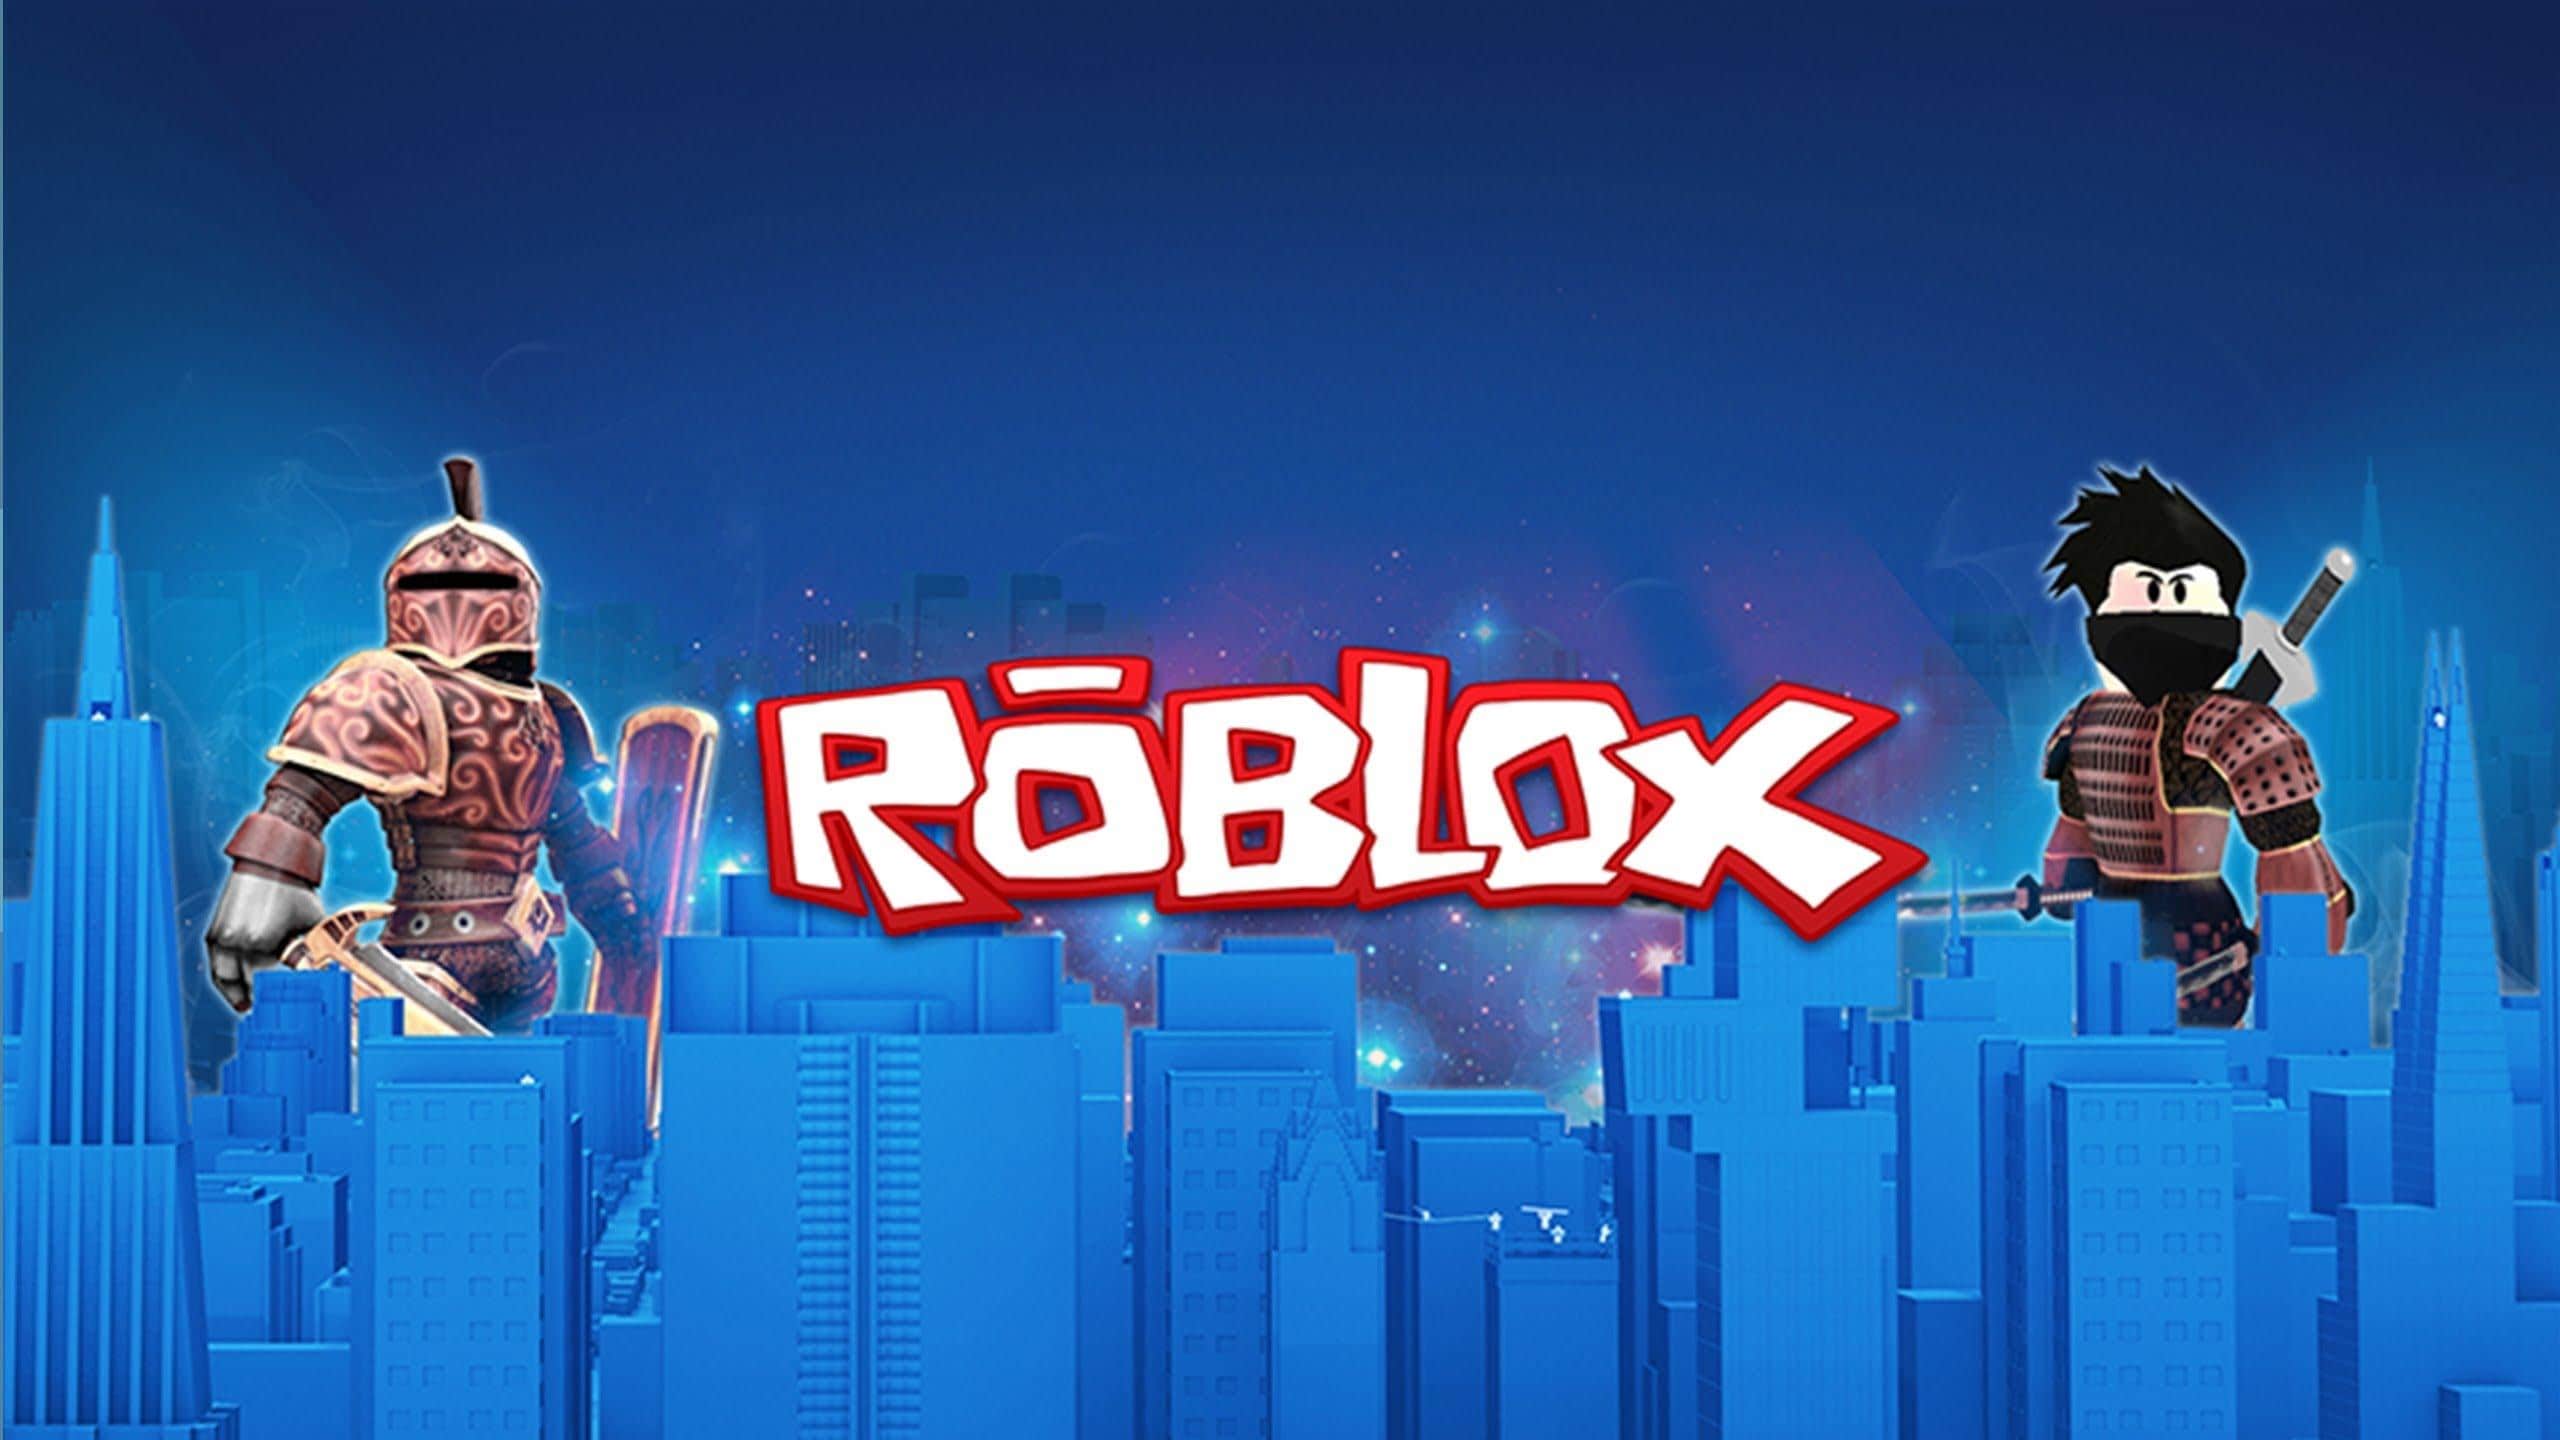 Roblox Hd Wallpaper Roblox Logo 12125 Hd Wallpaper Backgrounds Download - roblox hd logo